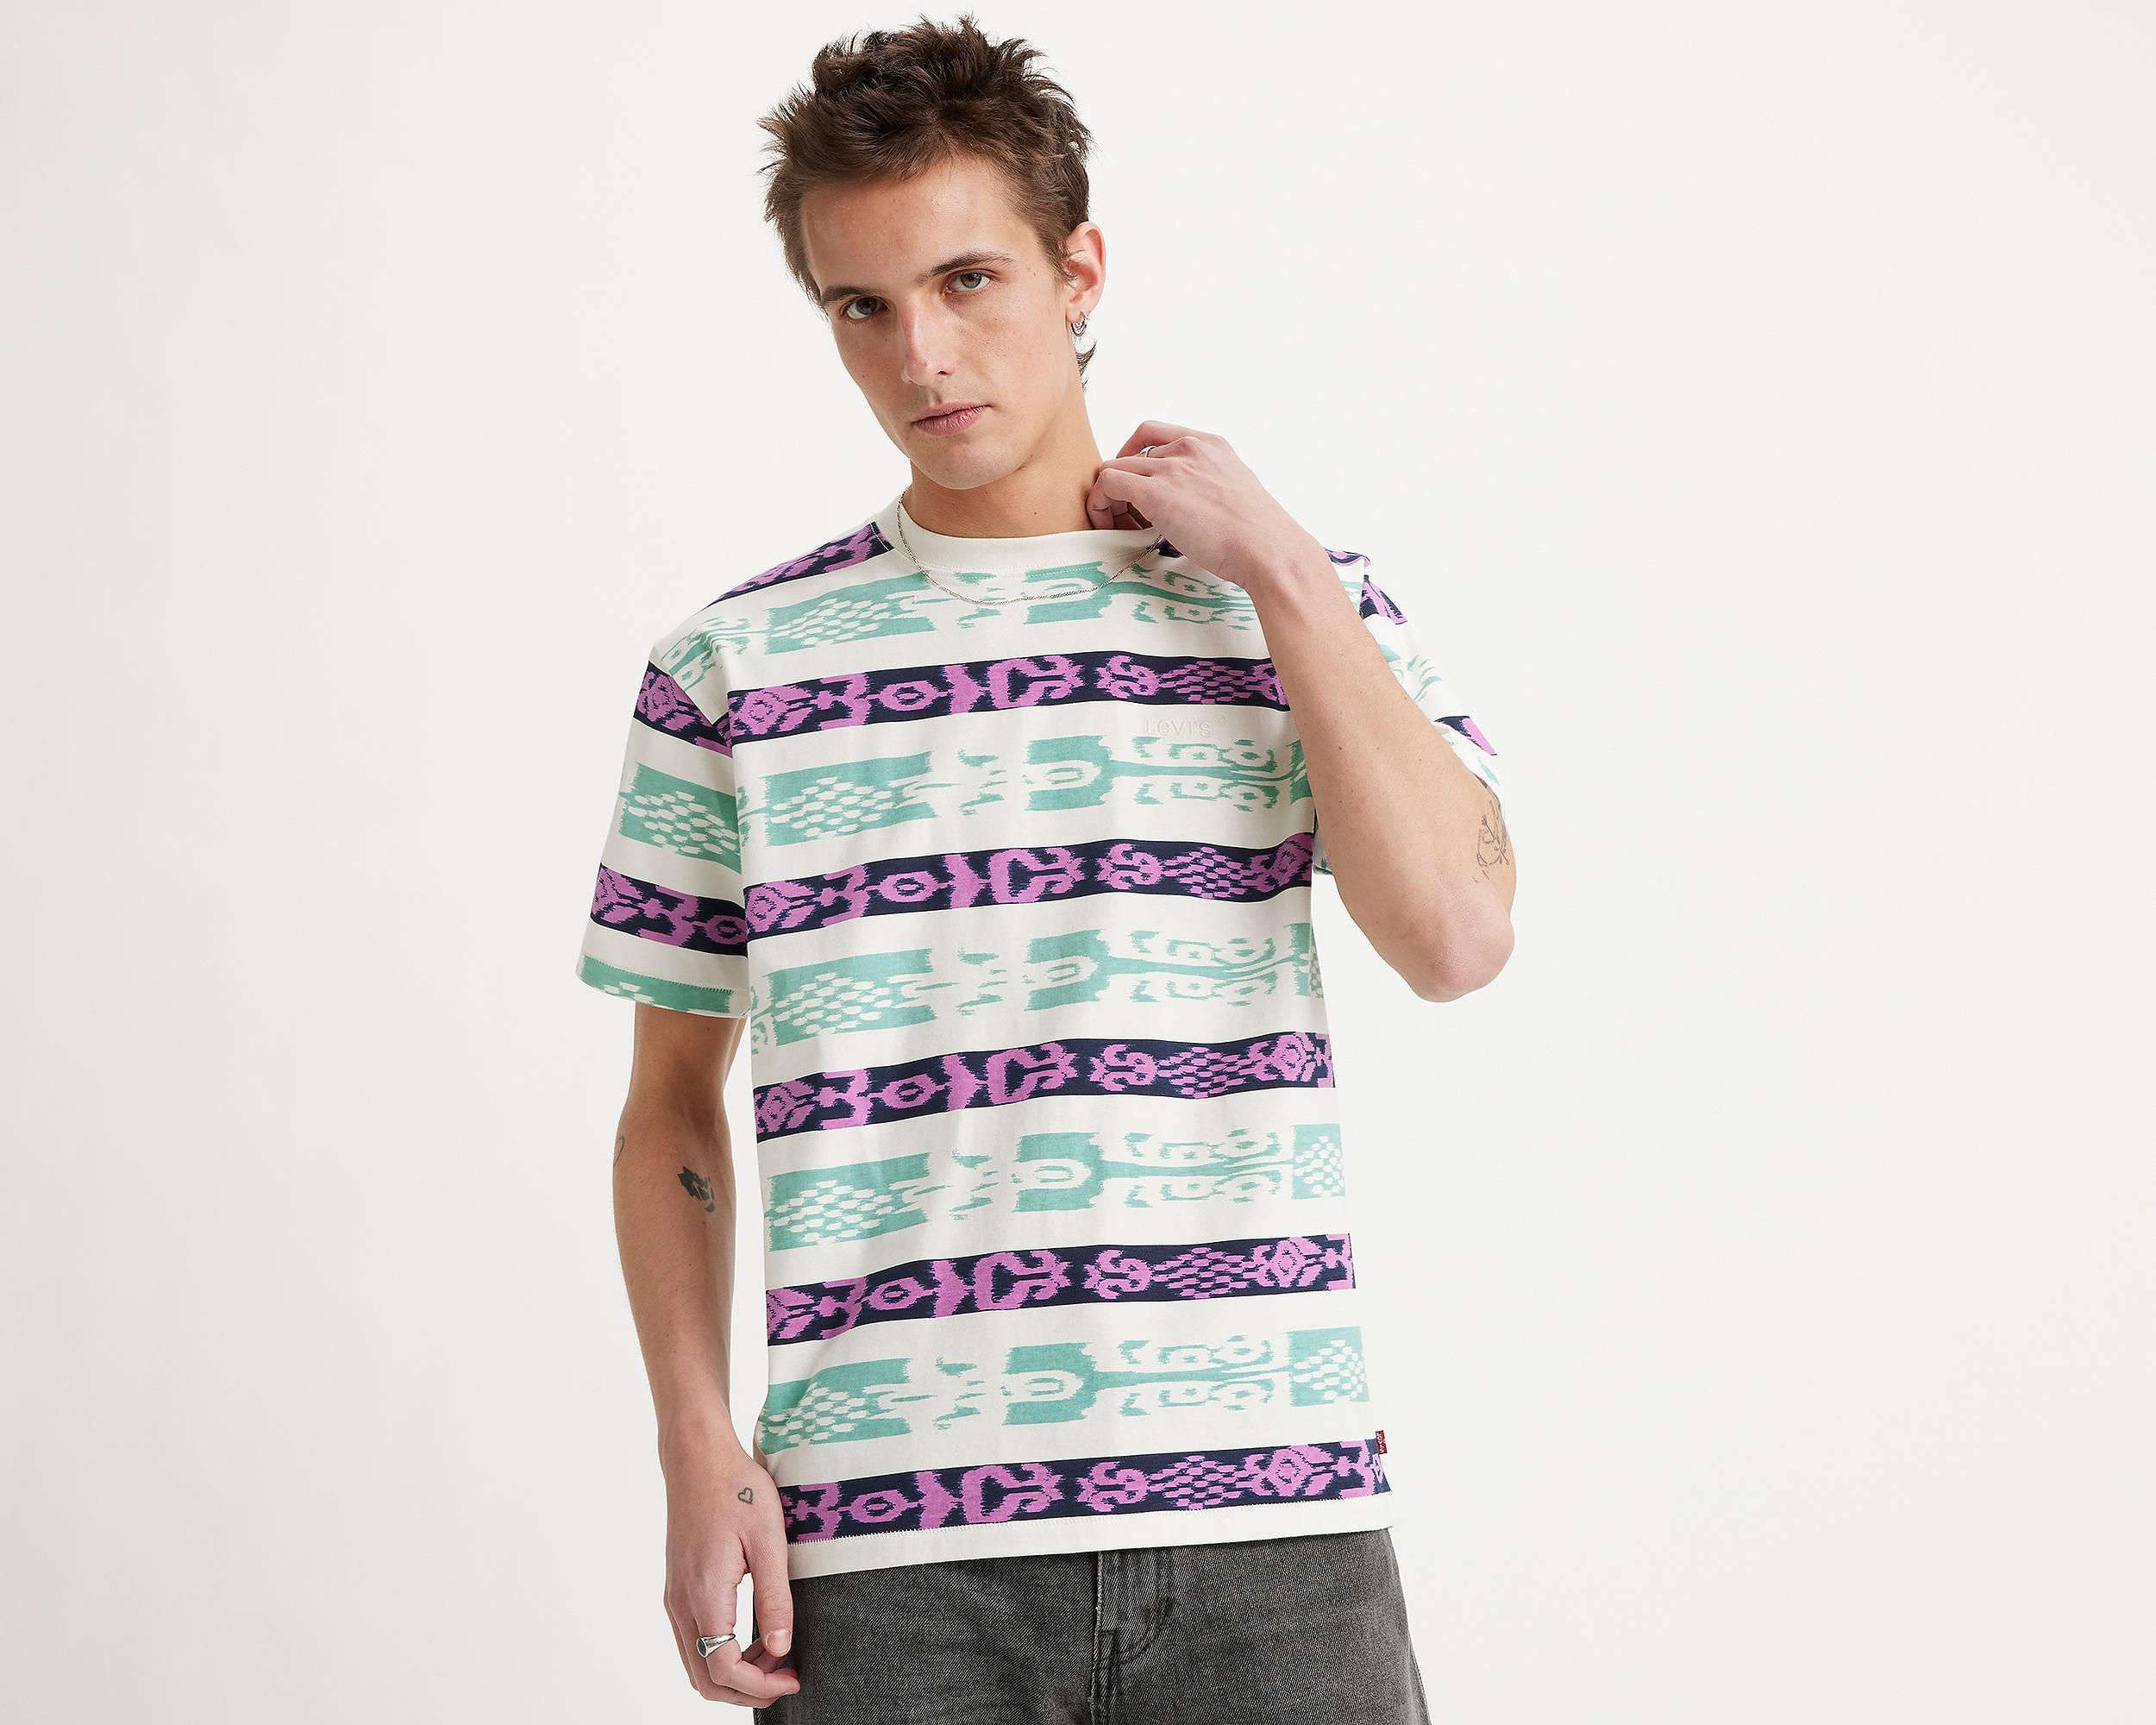 T-shirt The Walten Files 4 masculina, roupa hippie, top gráfico bonito,  verão, grande e alto - AliExpress